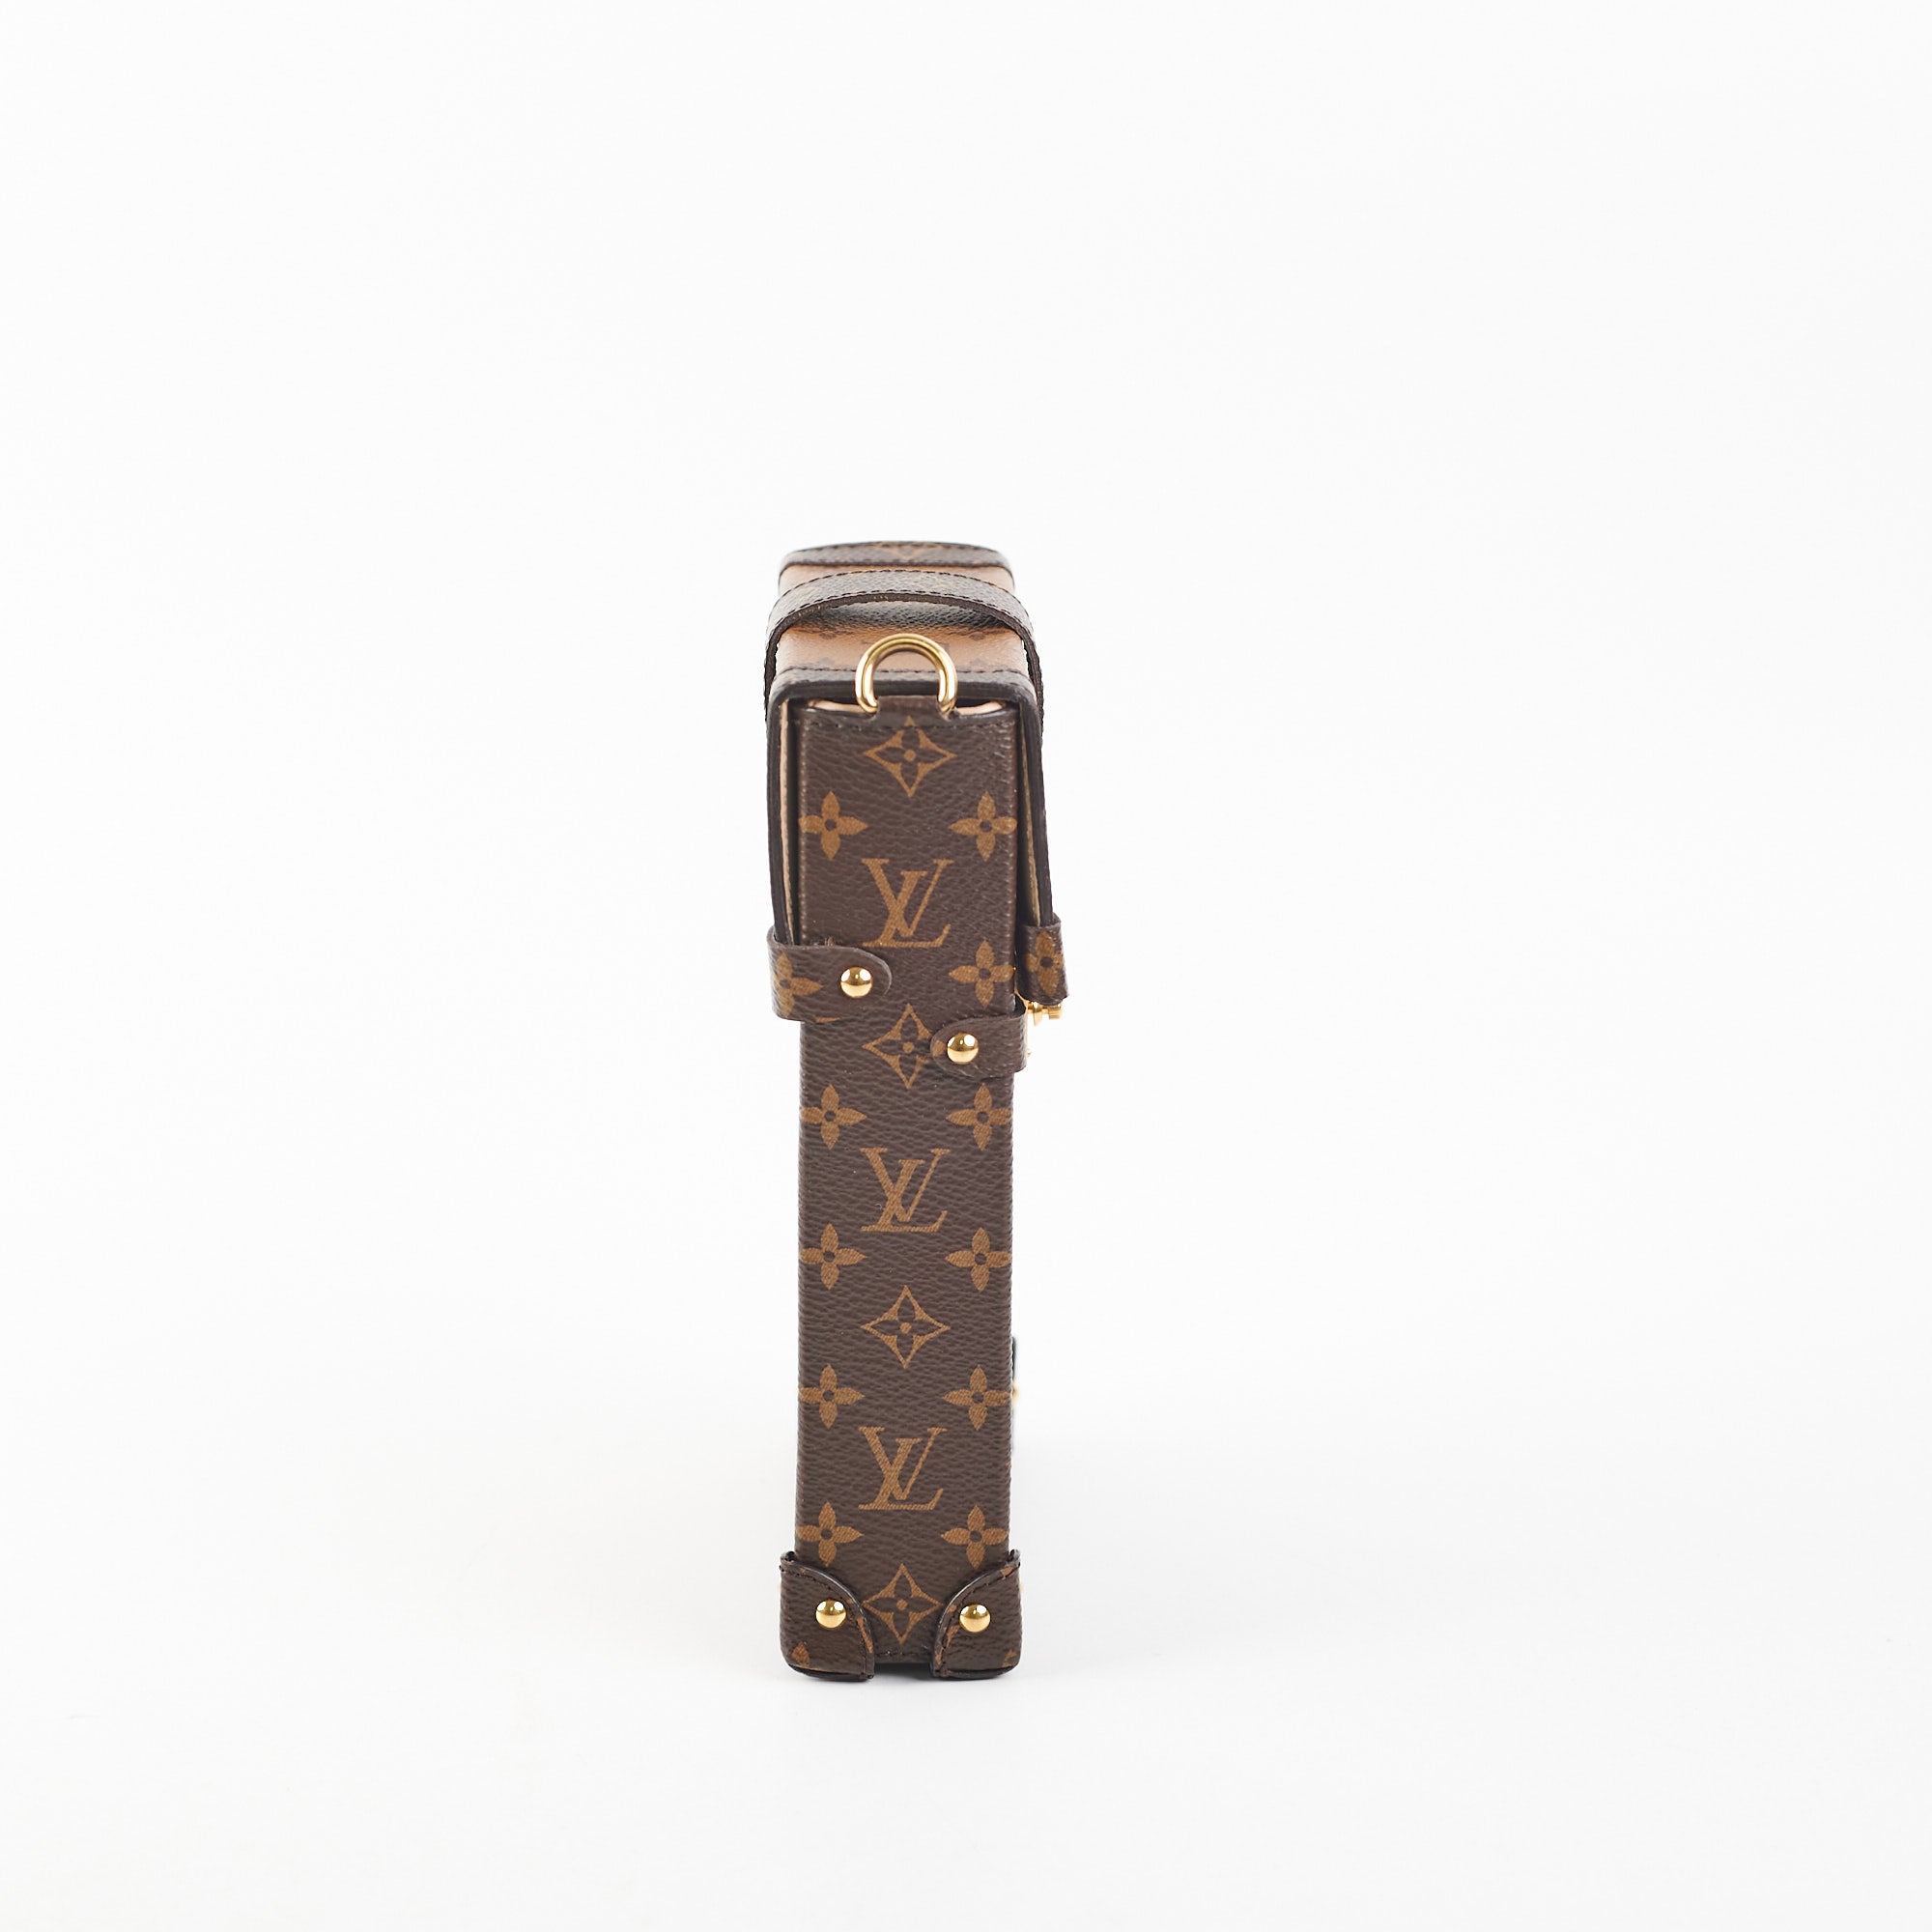 Louis Vuitton Trunks Phone Bag, Canvas, Reverse Mono - Laulay Luxury